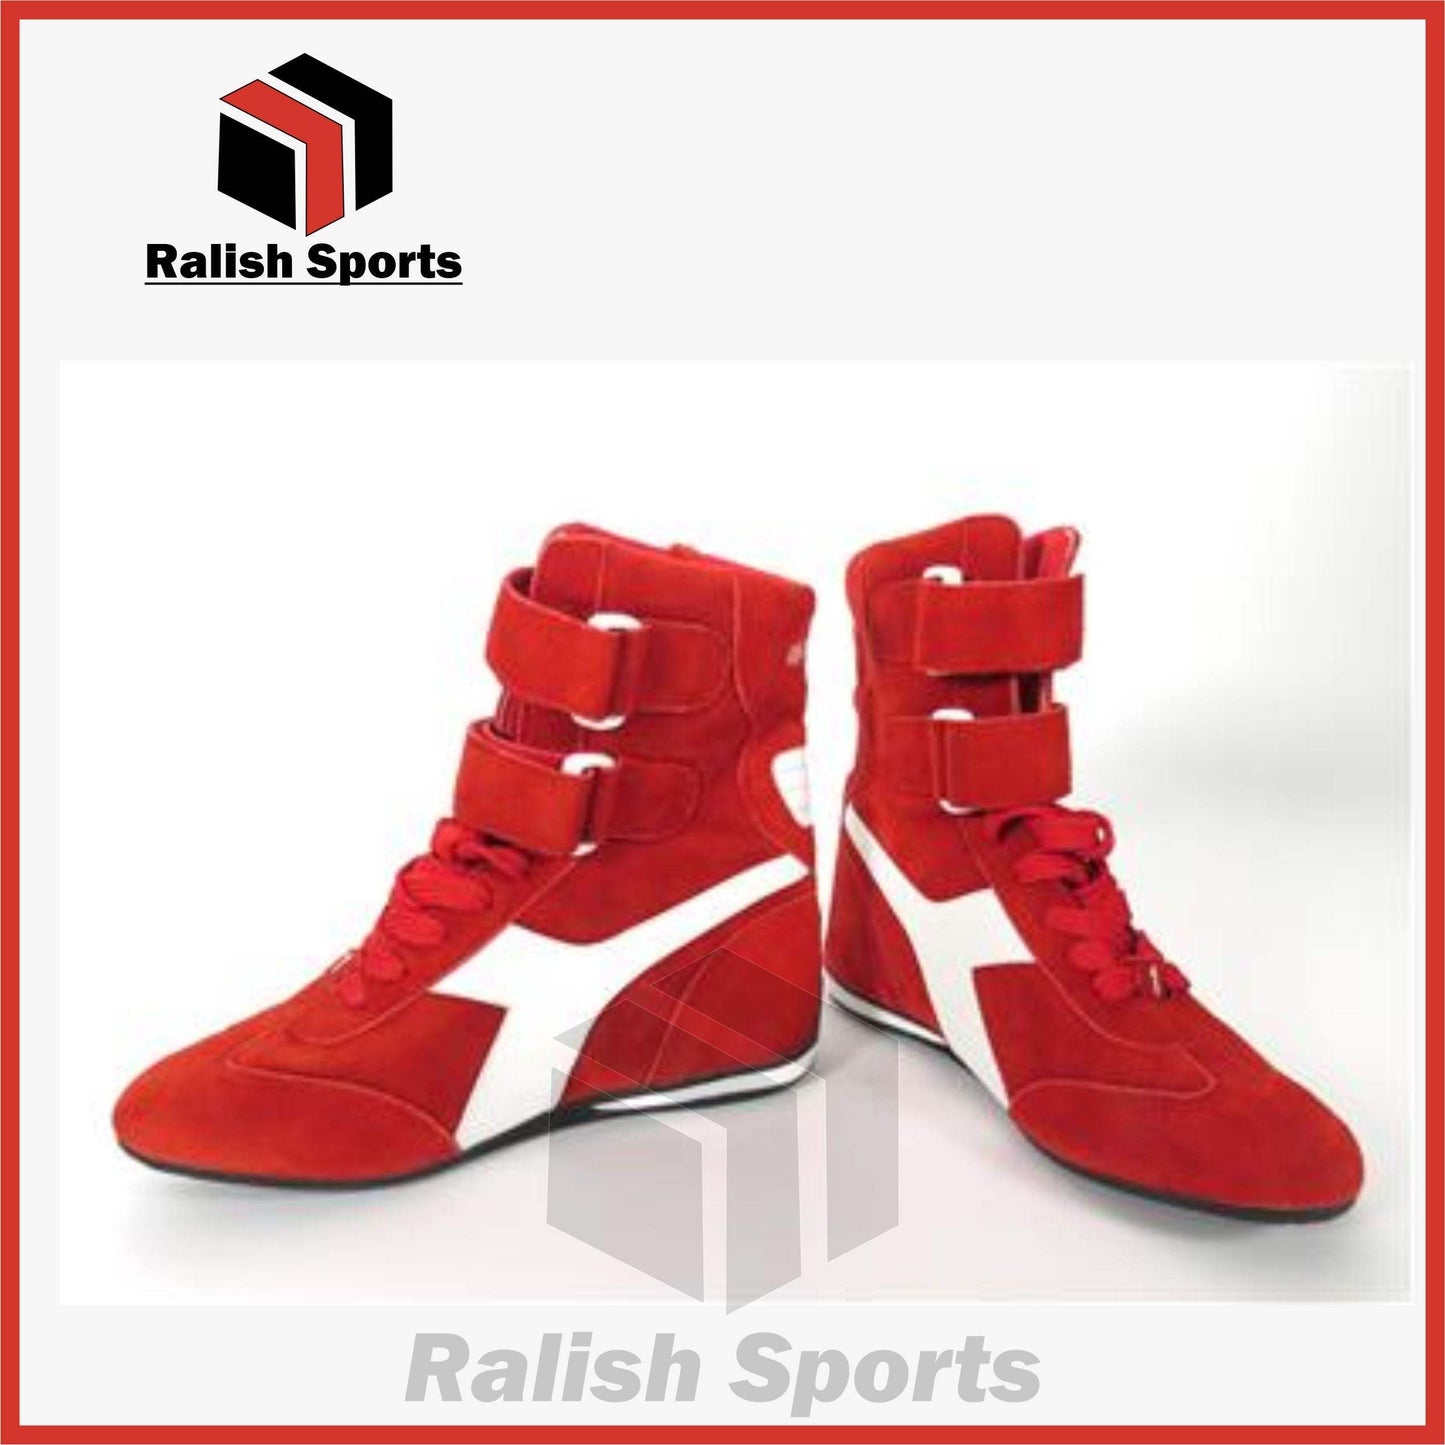 Ayrton Senna Racing Shoes - Ralish Sports